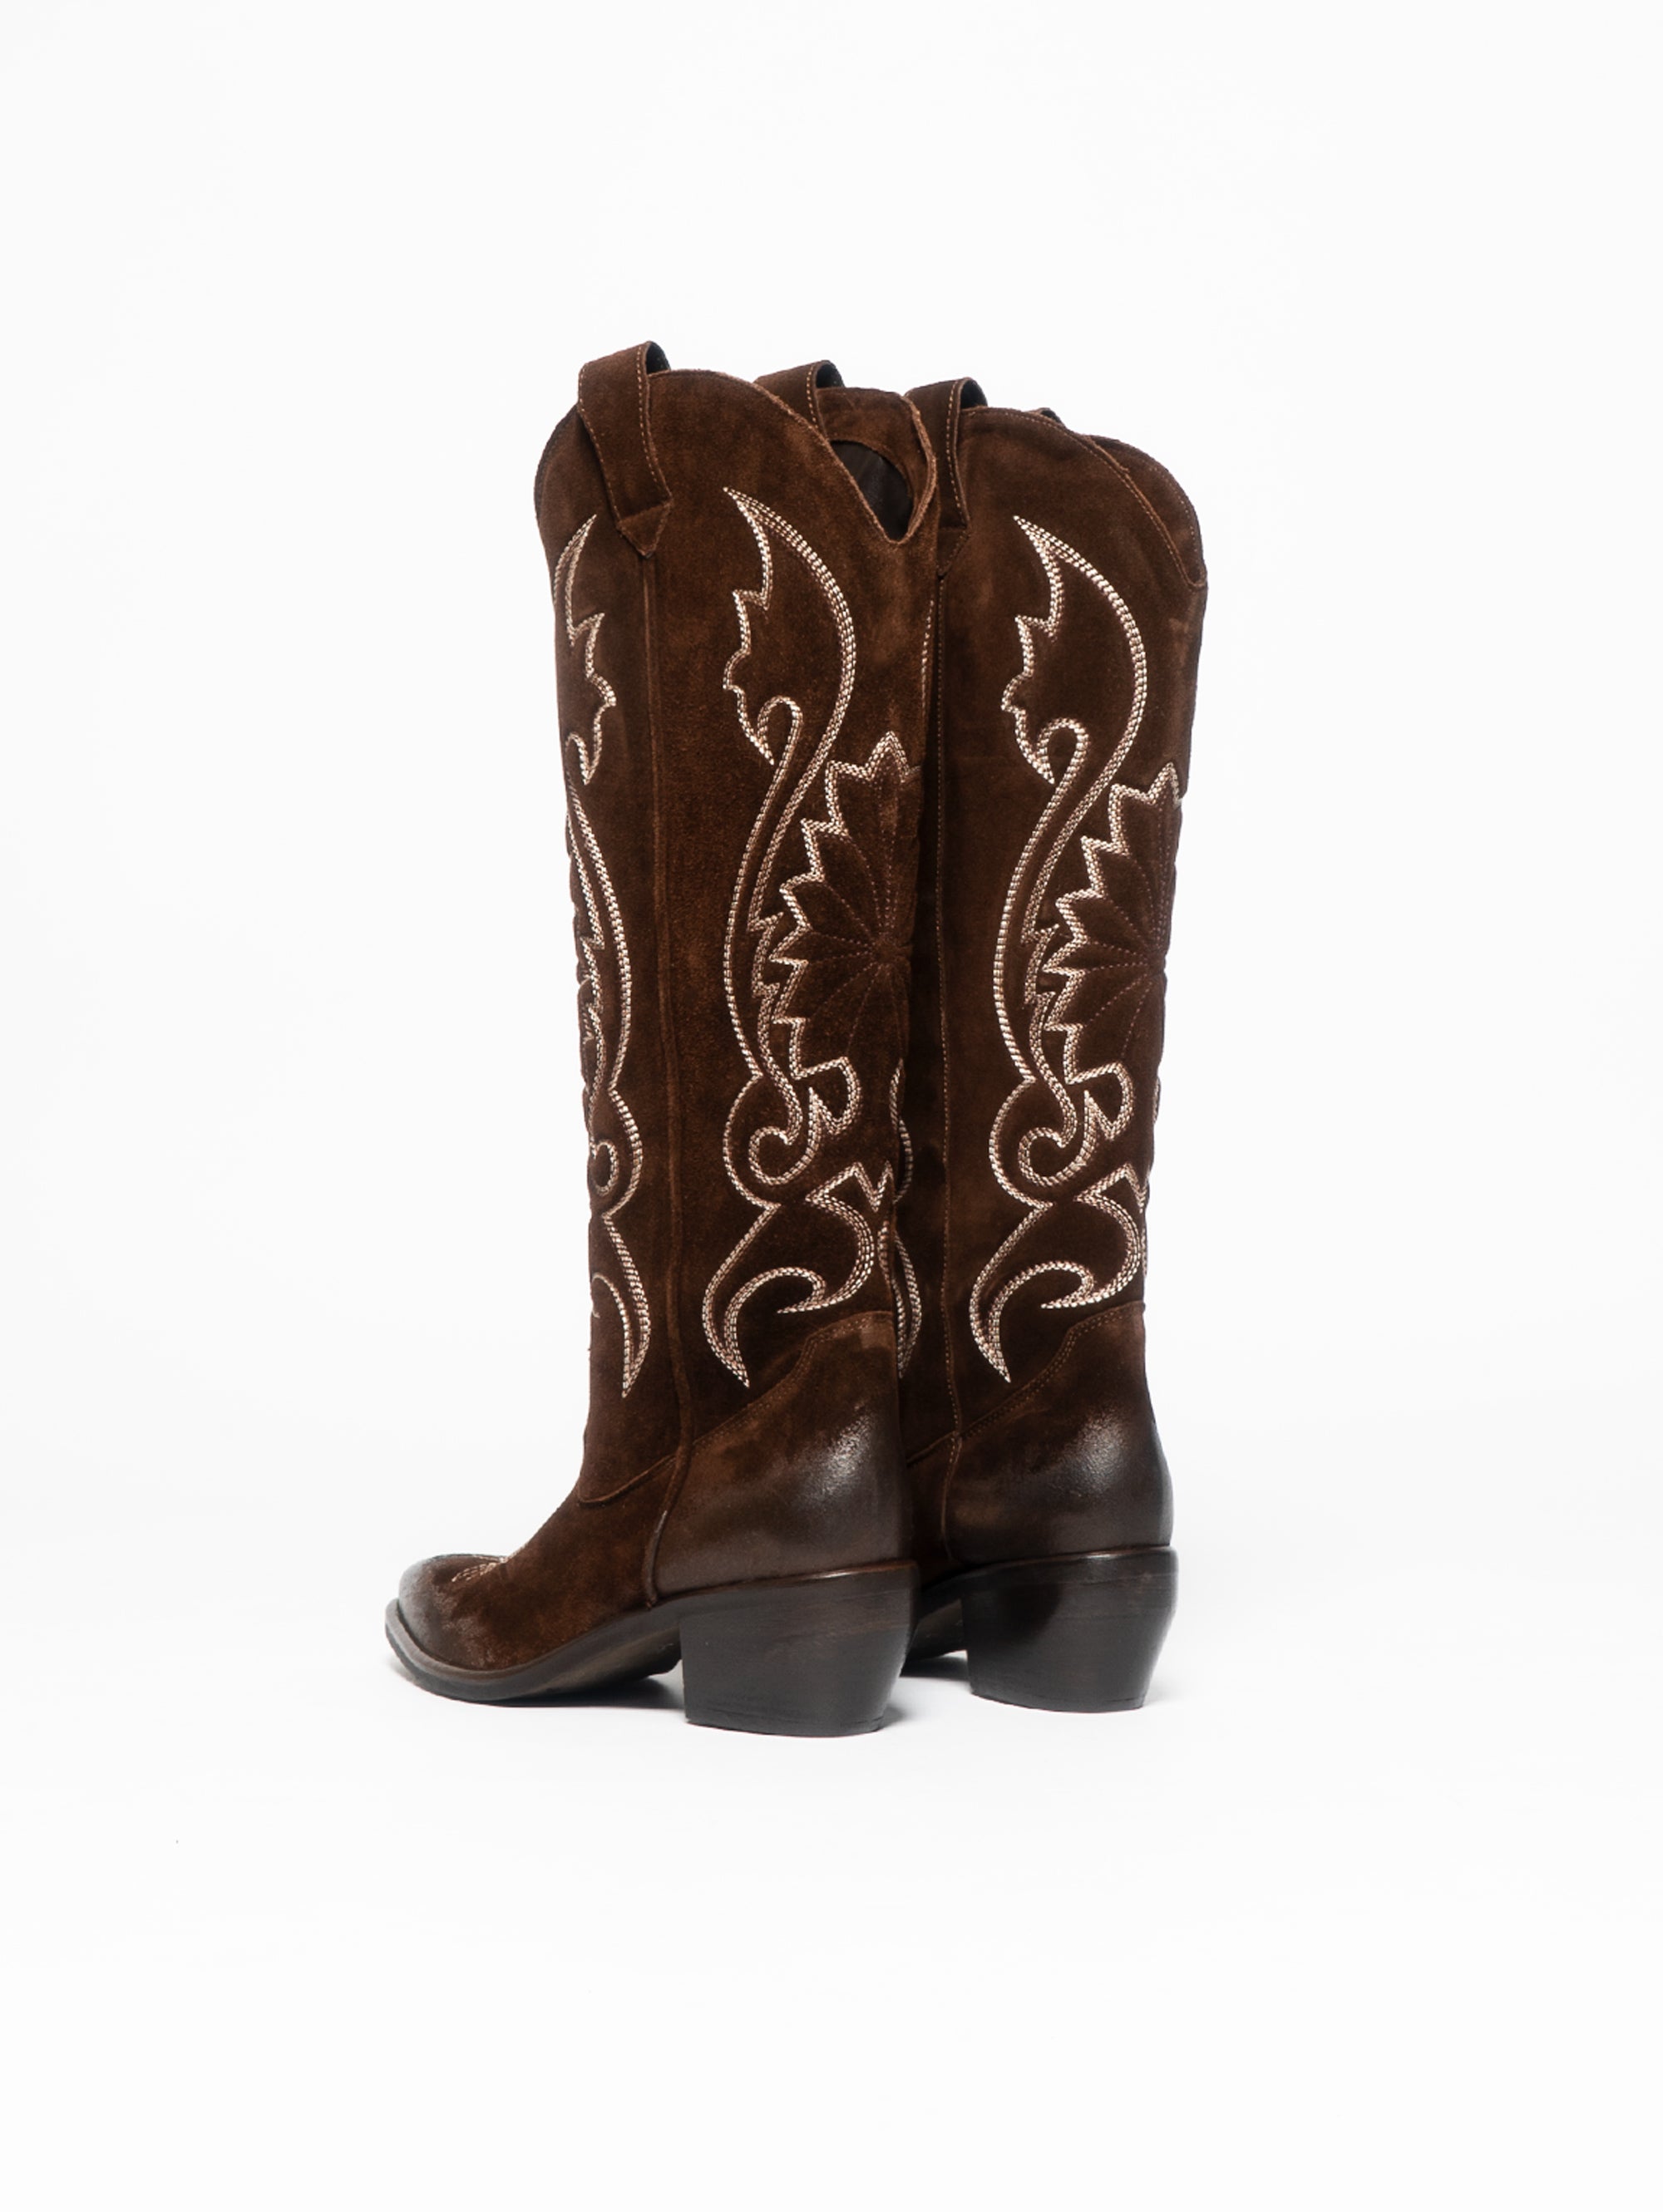 Western style Texan boots in dark brown